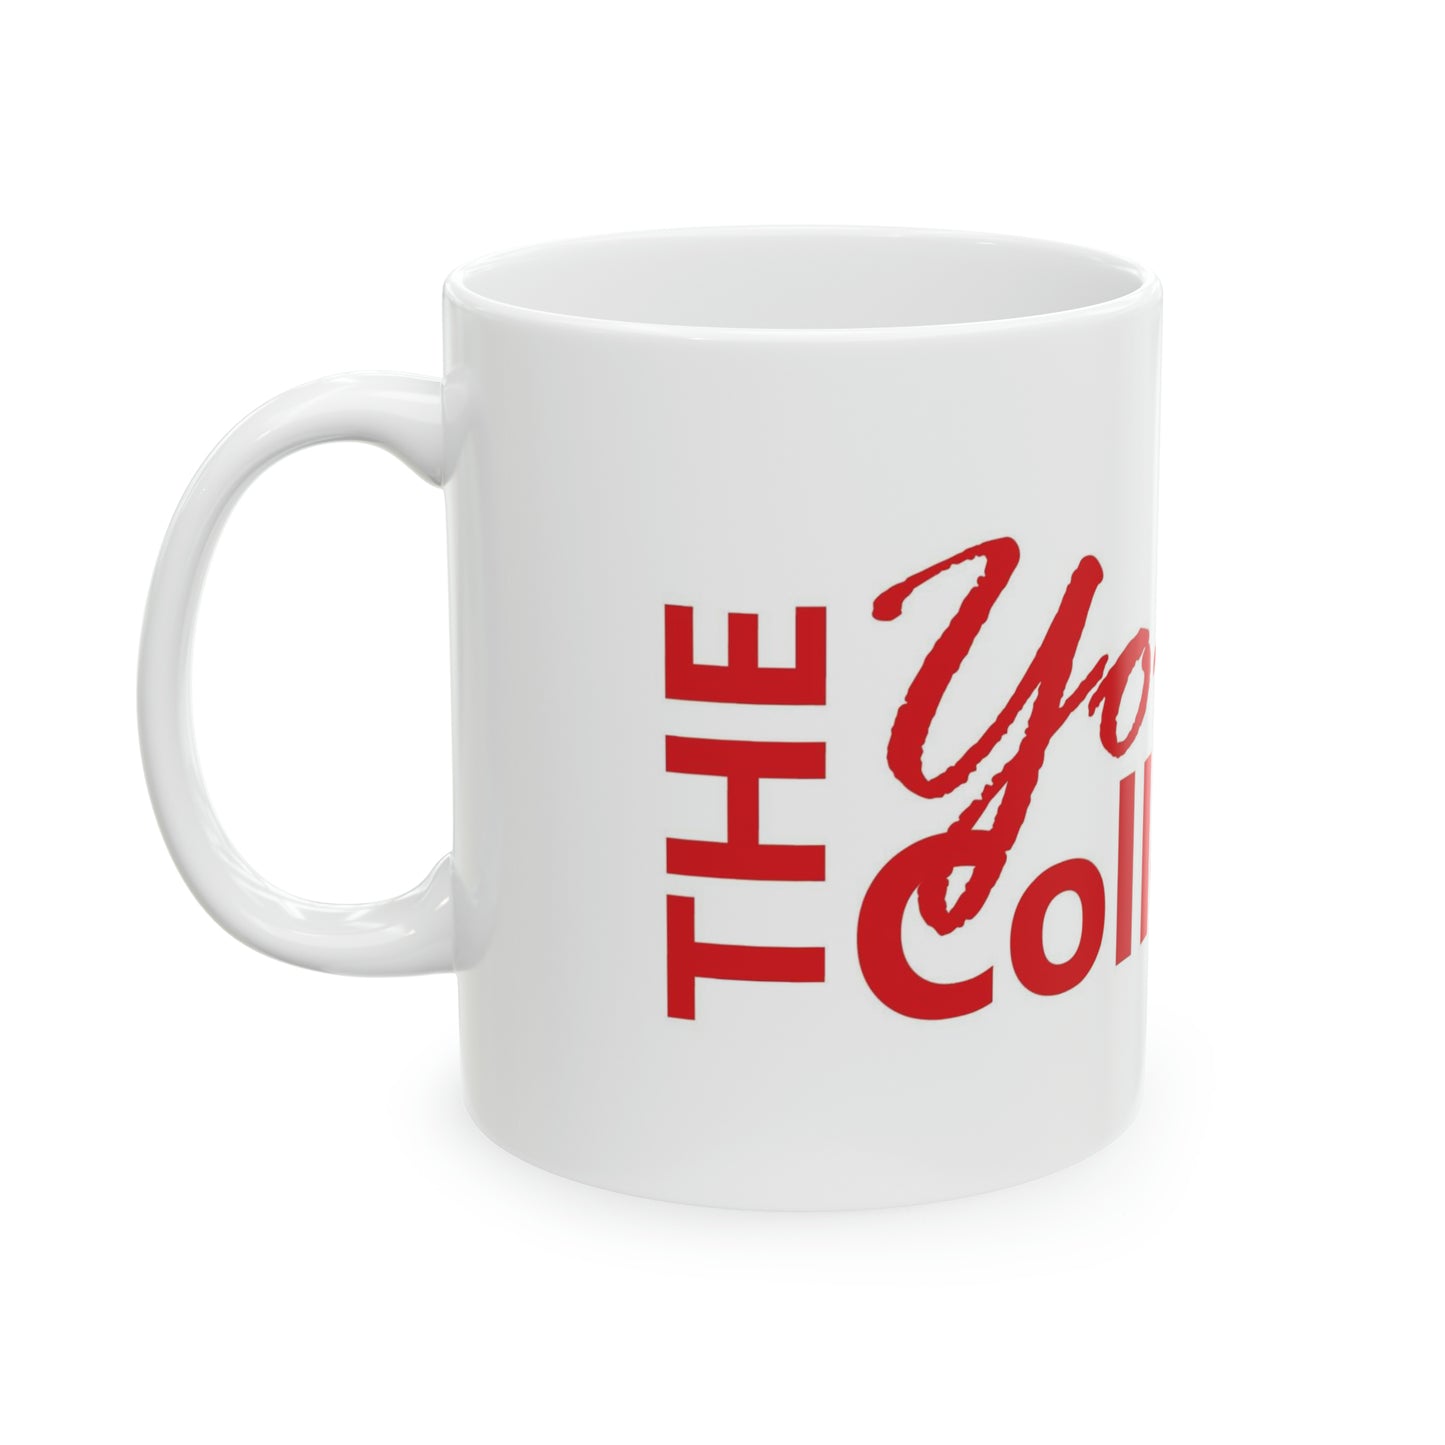 The Yorkie Collection - Ceramic Mug, 11oz